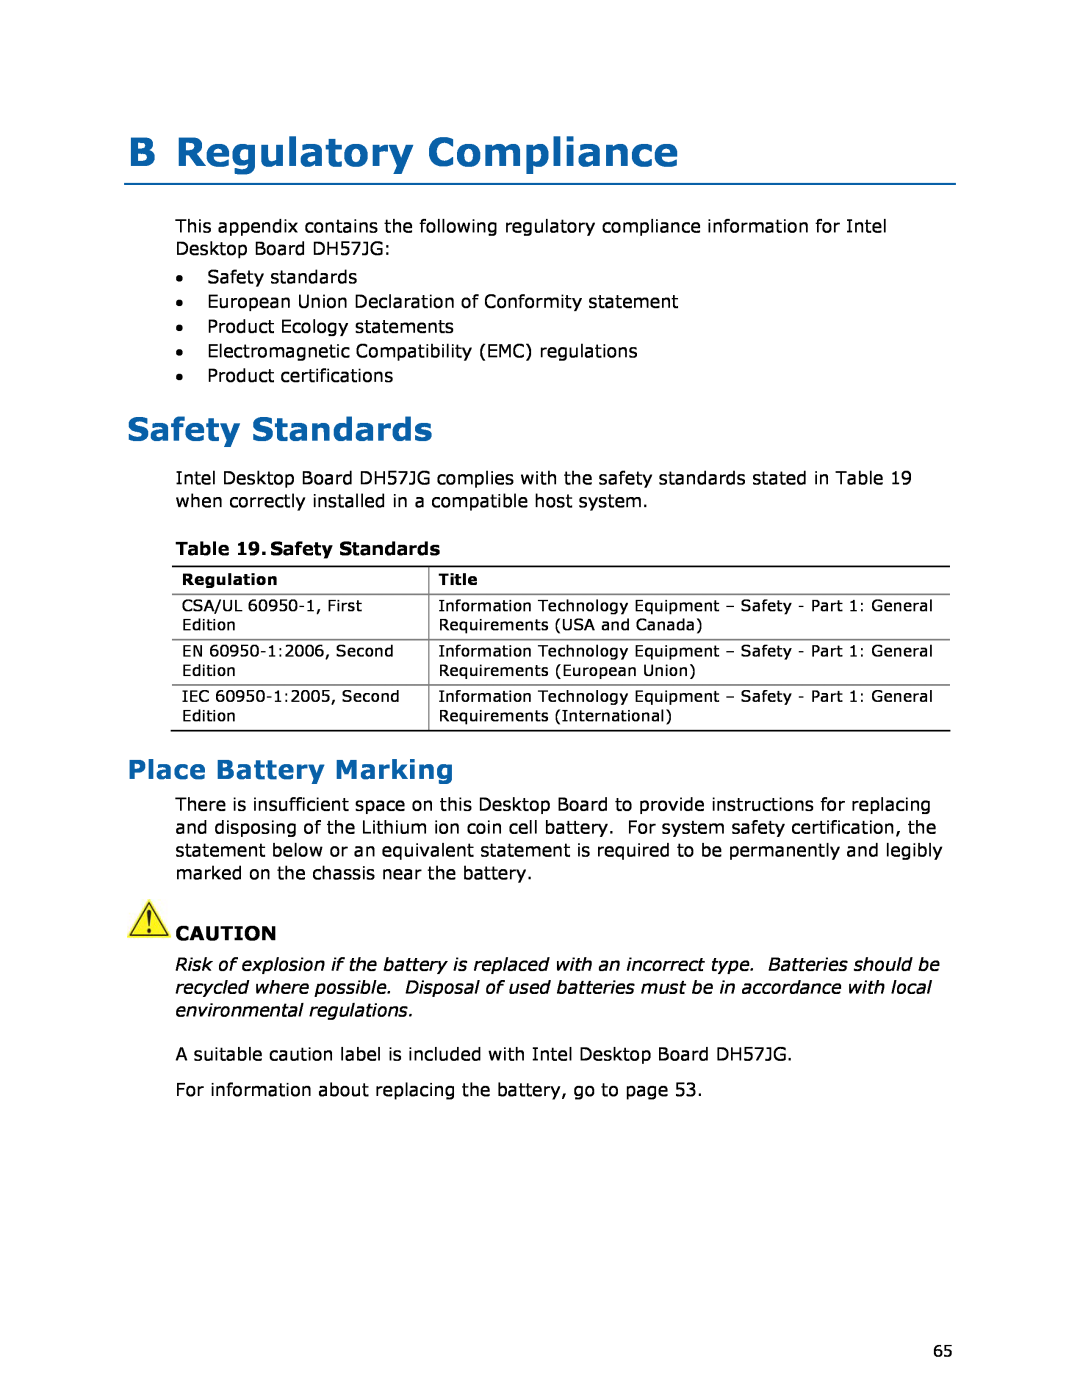 Intel BLKDH57JG manual B Regulatory Compliance, Safety Standards, Place Battery Marking 